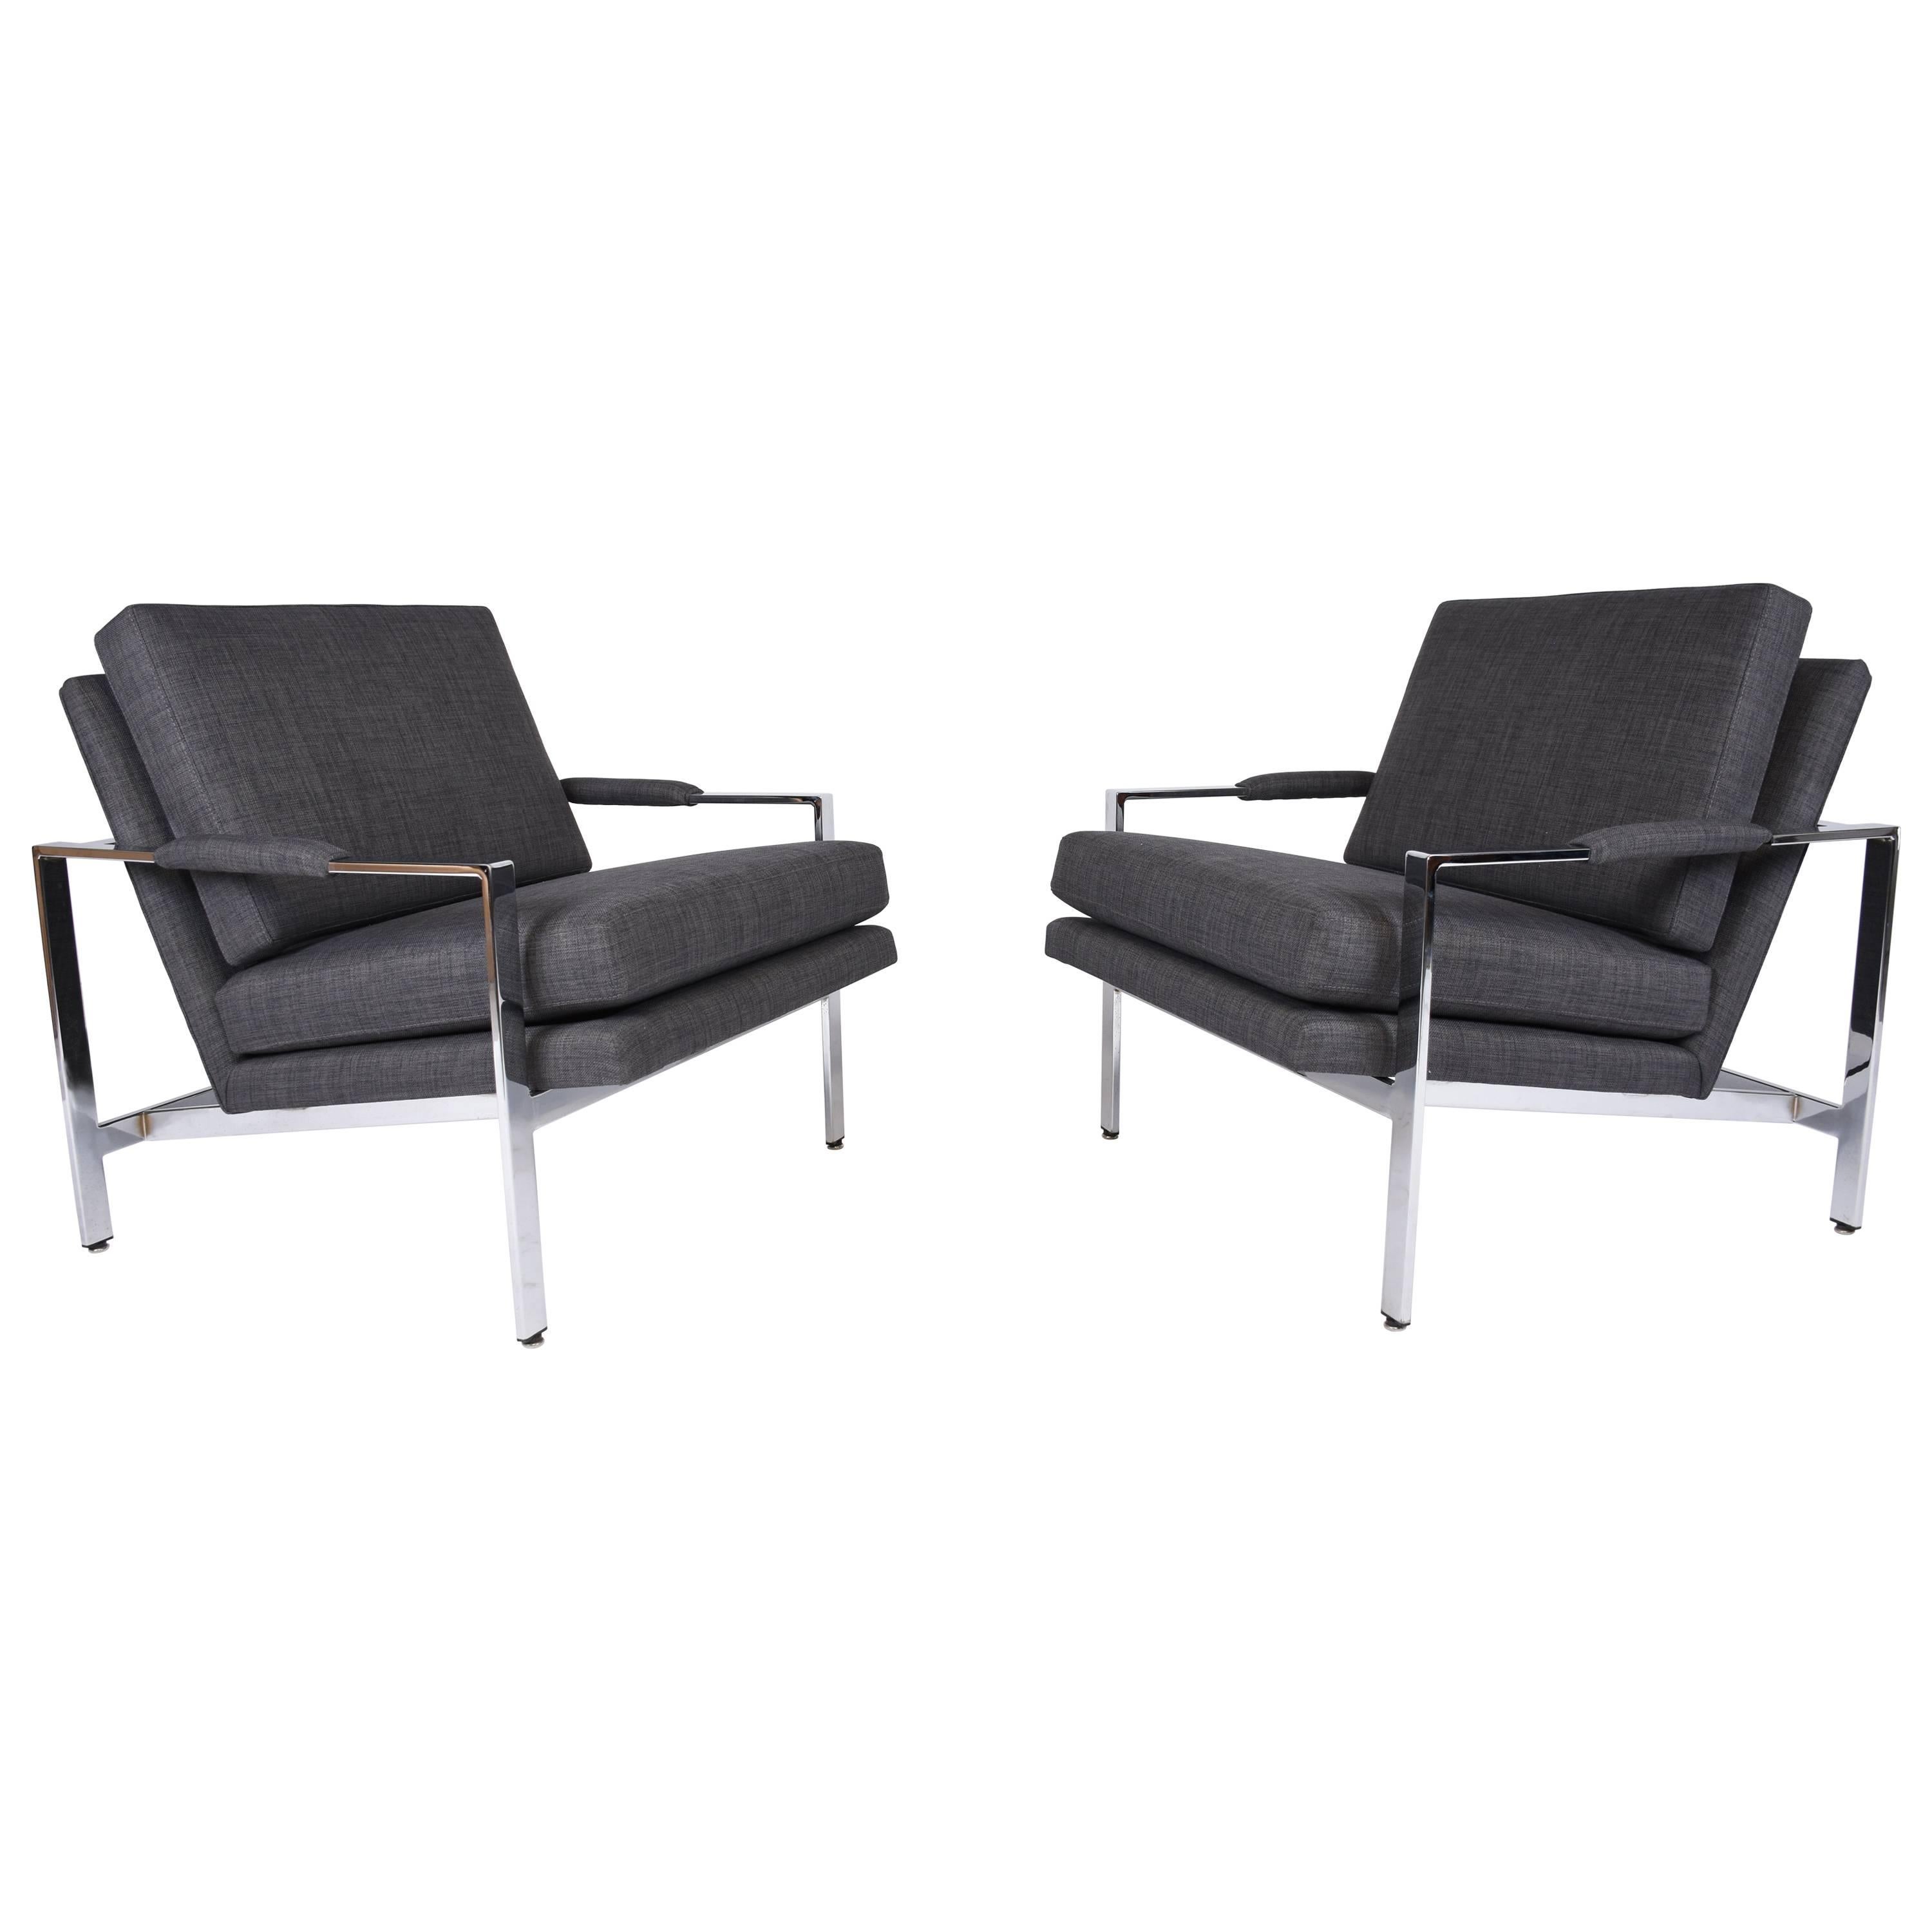 Pair of Mid-Century Modern Milo Baughman Lounge Chairs